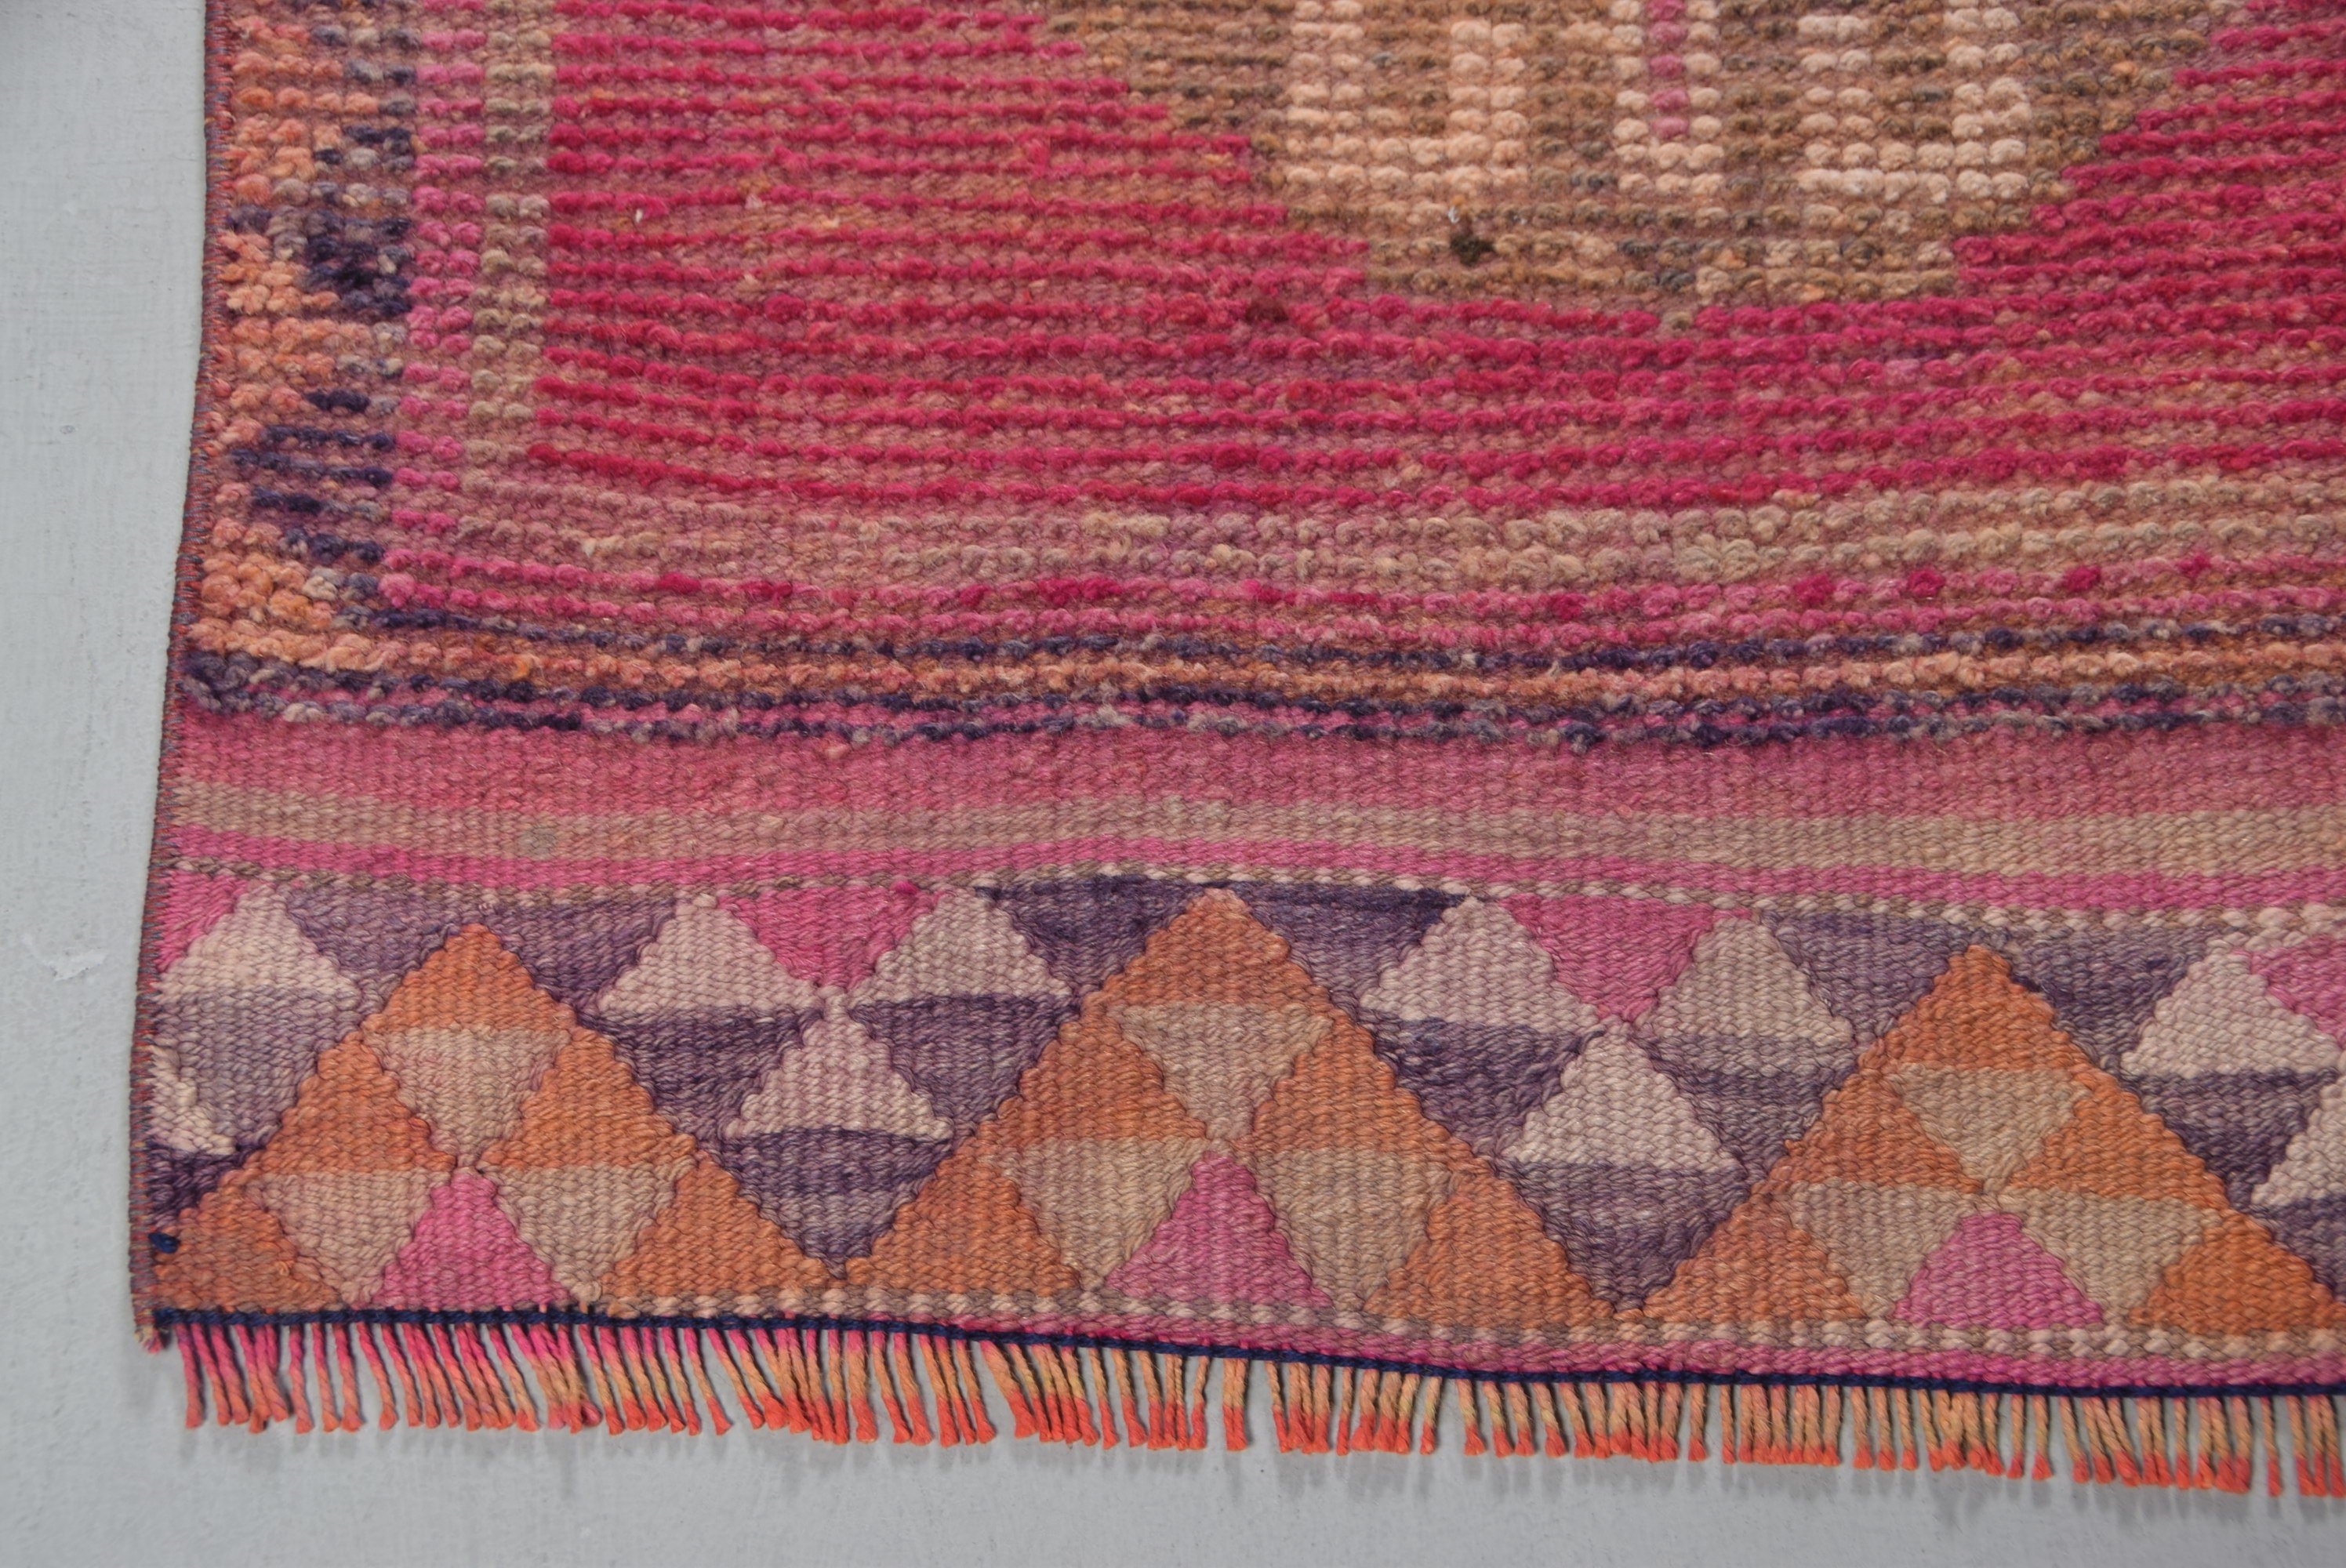 Aztec Rug, Rugs for Runner, Anatolian Rugs, Pink Oushak Rugs, 2.6x9.9 ft Runner Rugs, Vintage Rug, Turkish Rugs, Antique Rug, Kitchen Rug